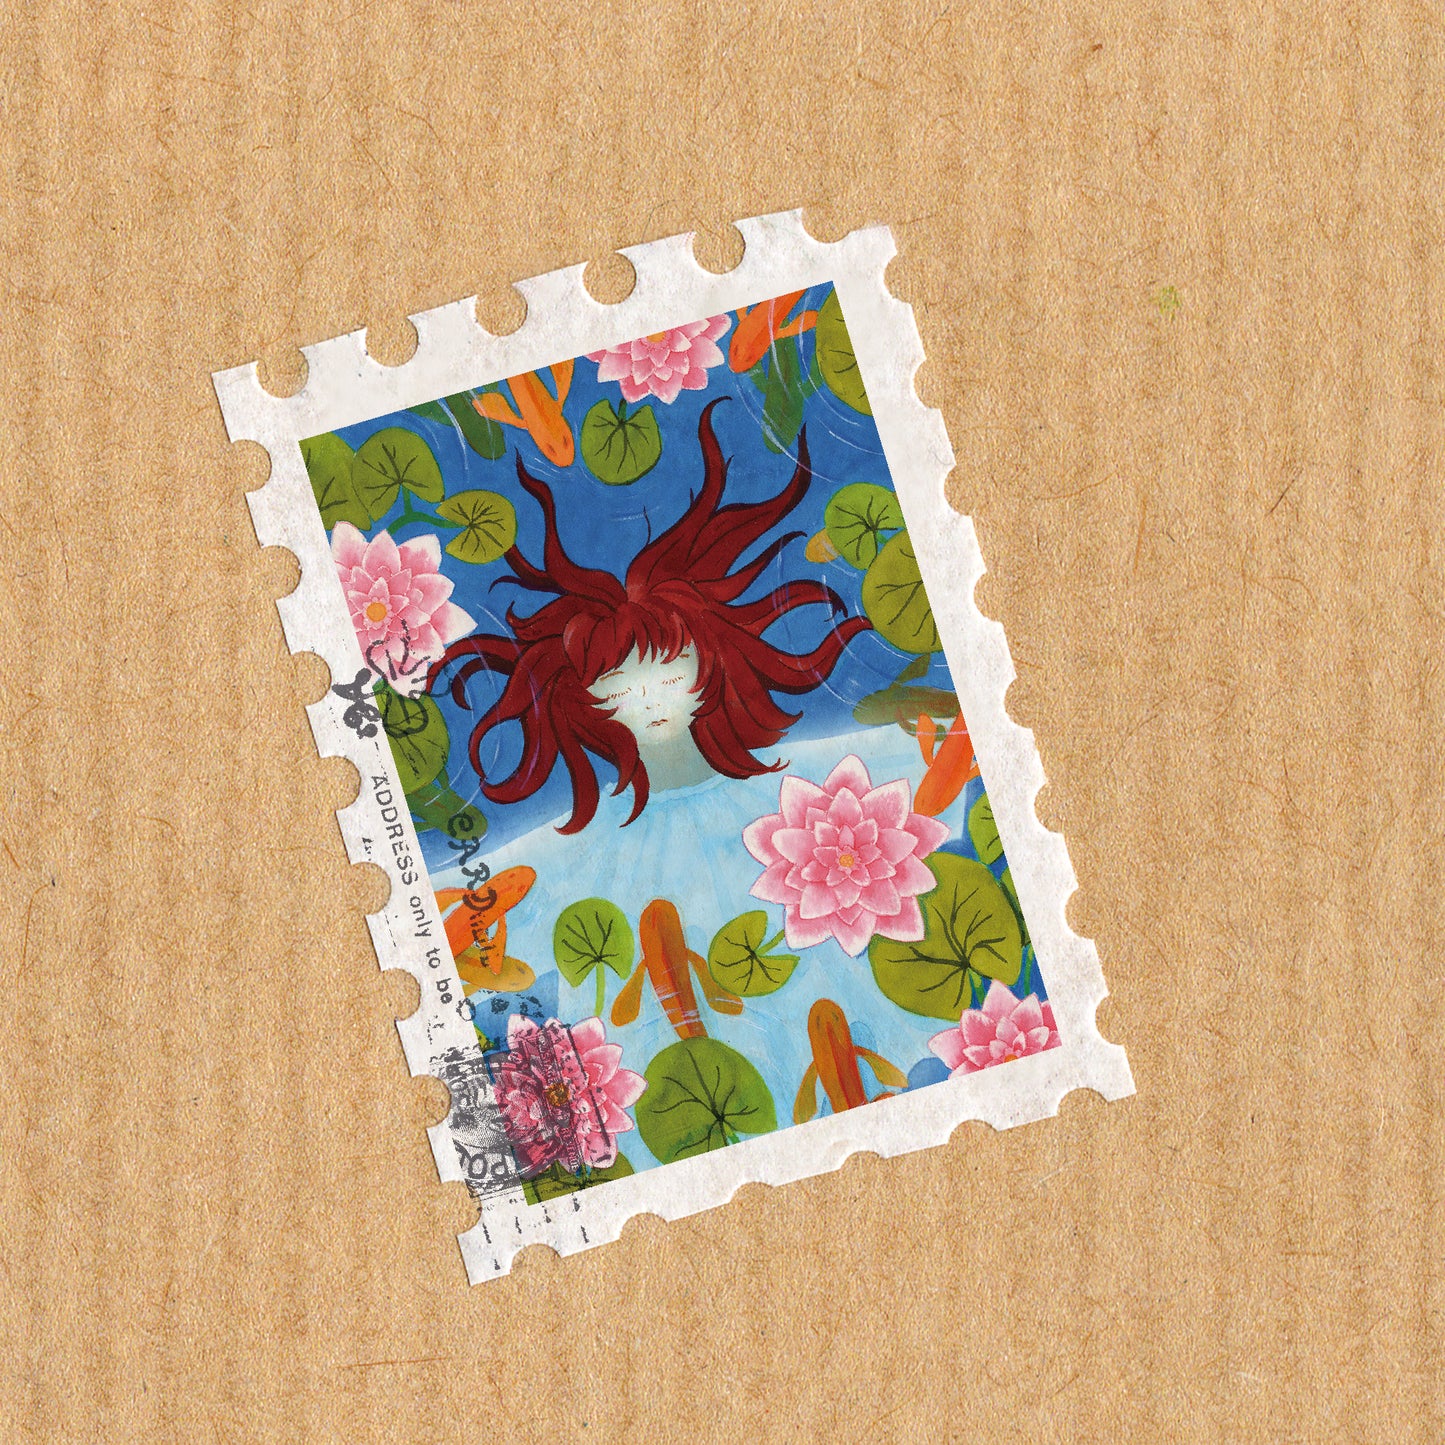 Washitape-Stamps 'Wunderliche Aquarell-Illustrationen' Aufkleber